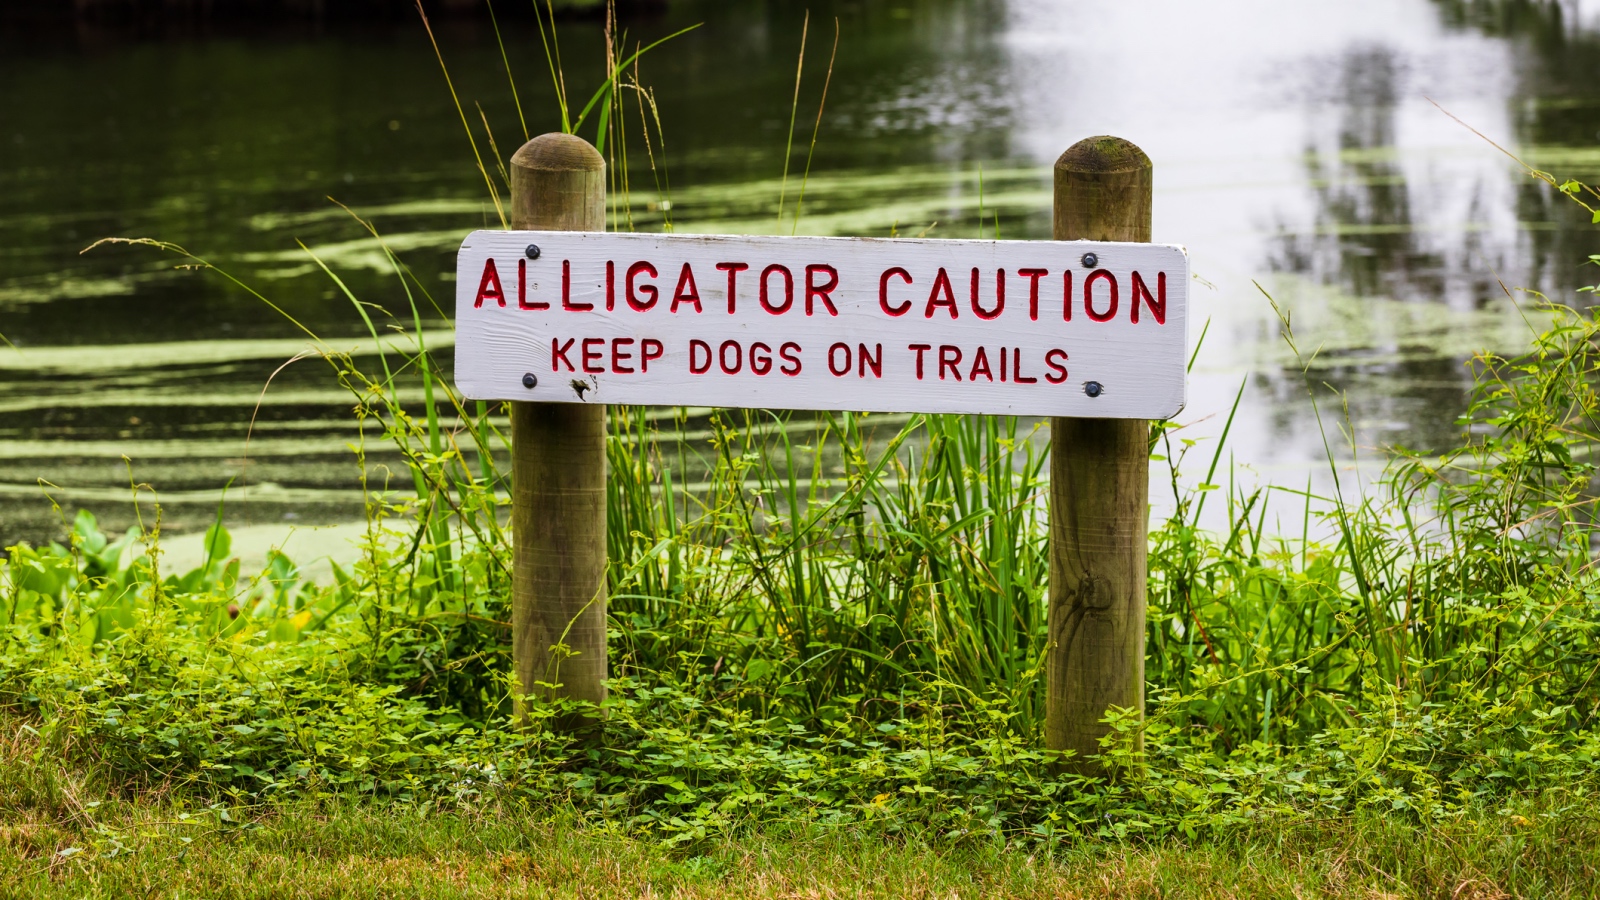 Alligator caution sign near pond in Florida